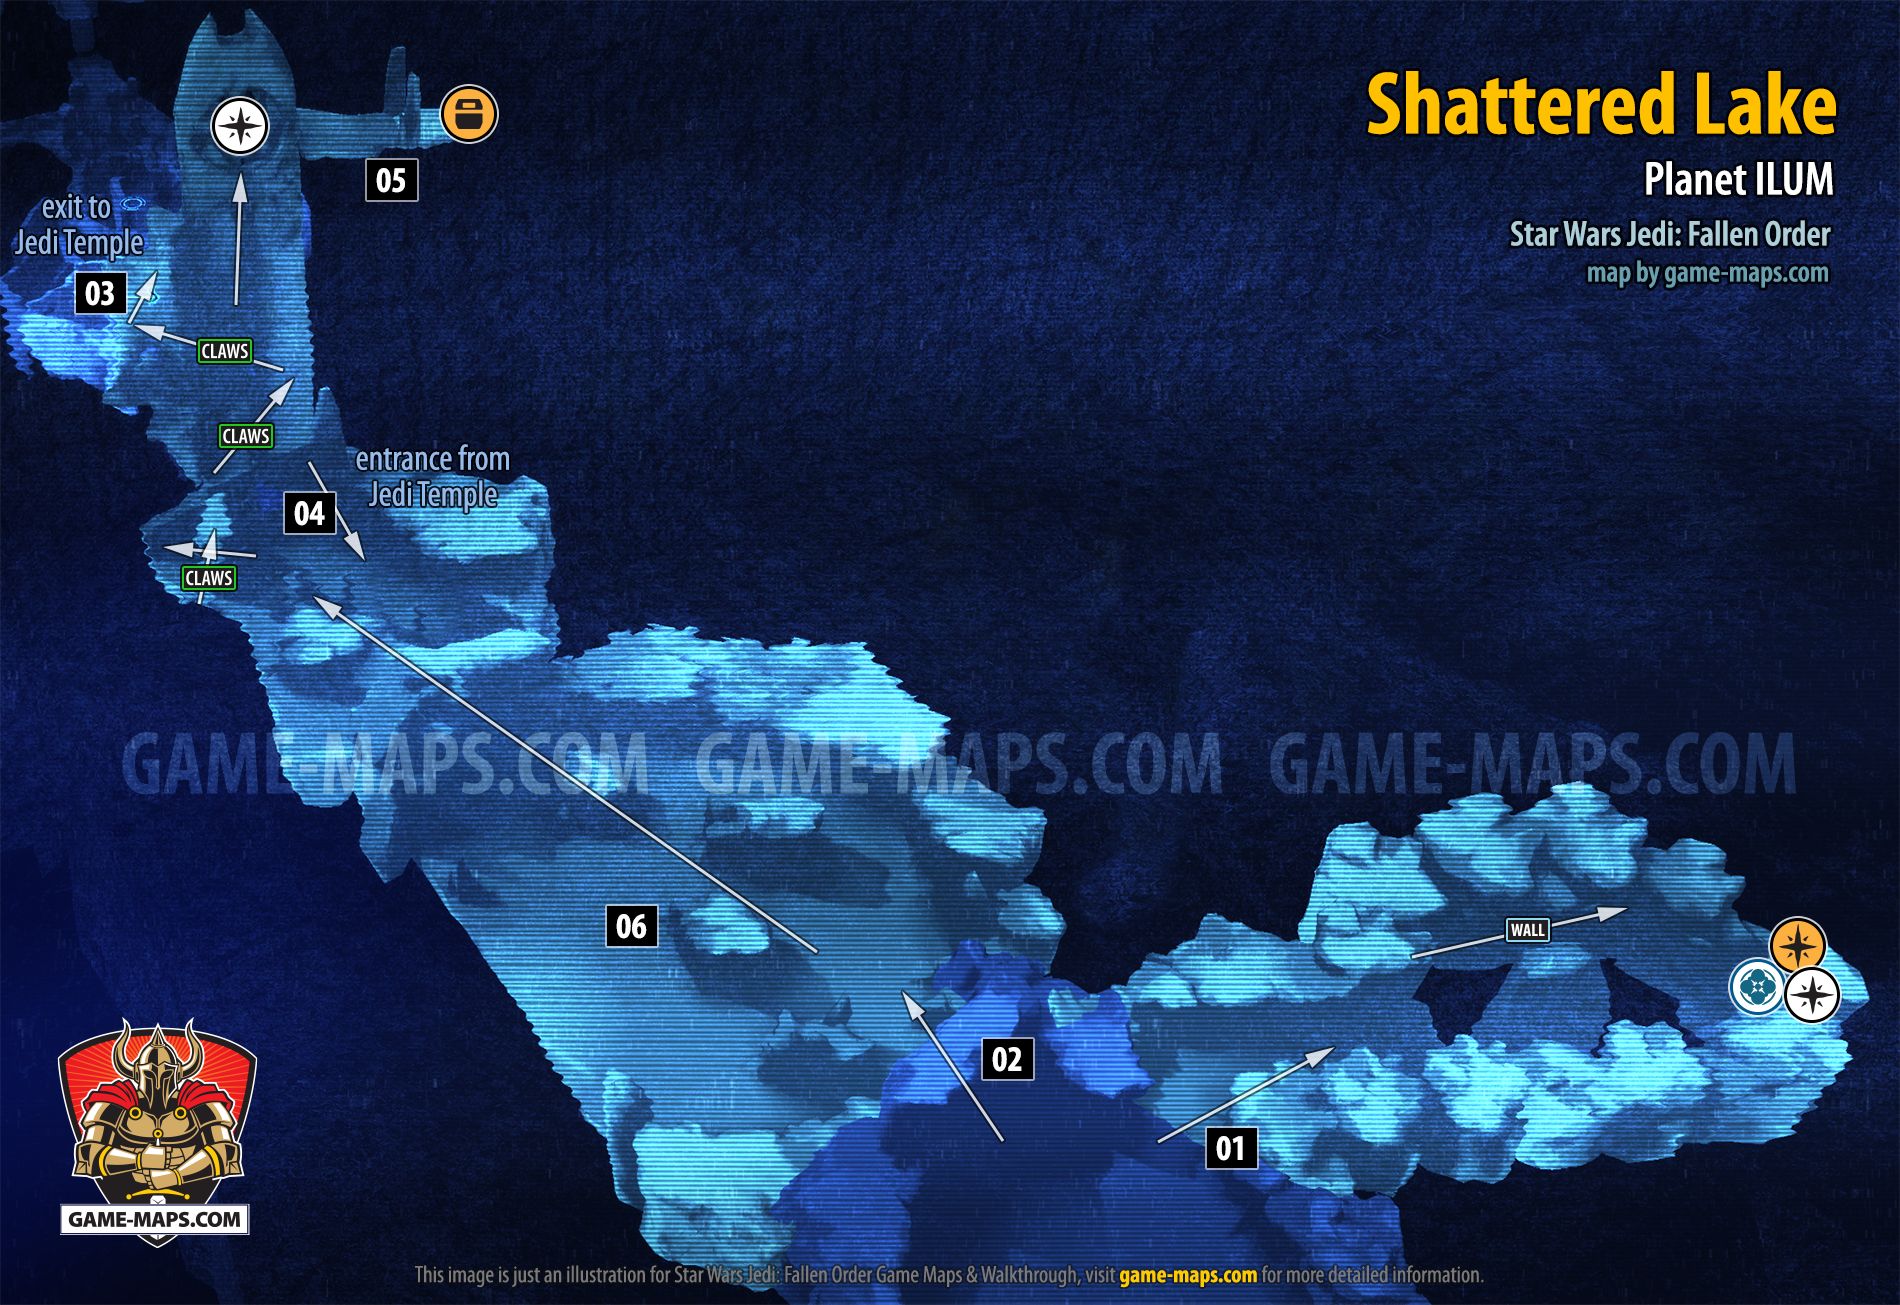 Shattered Lake Map, Planet Ilum for Star Wars Jedi Fallen Order